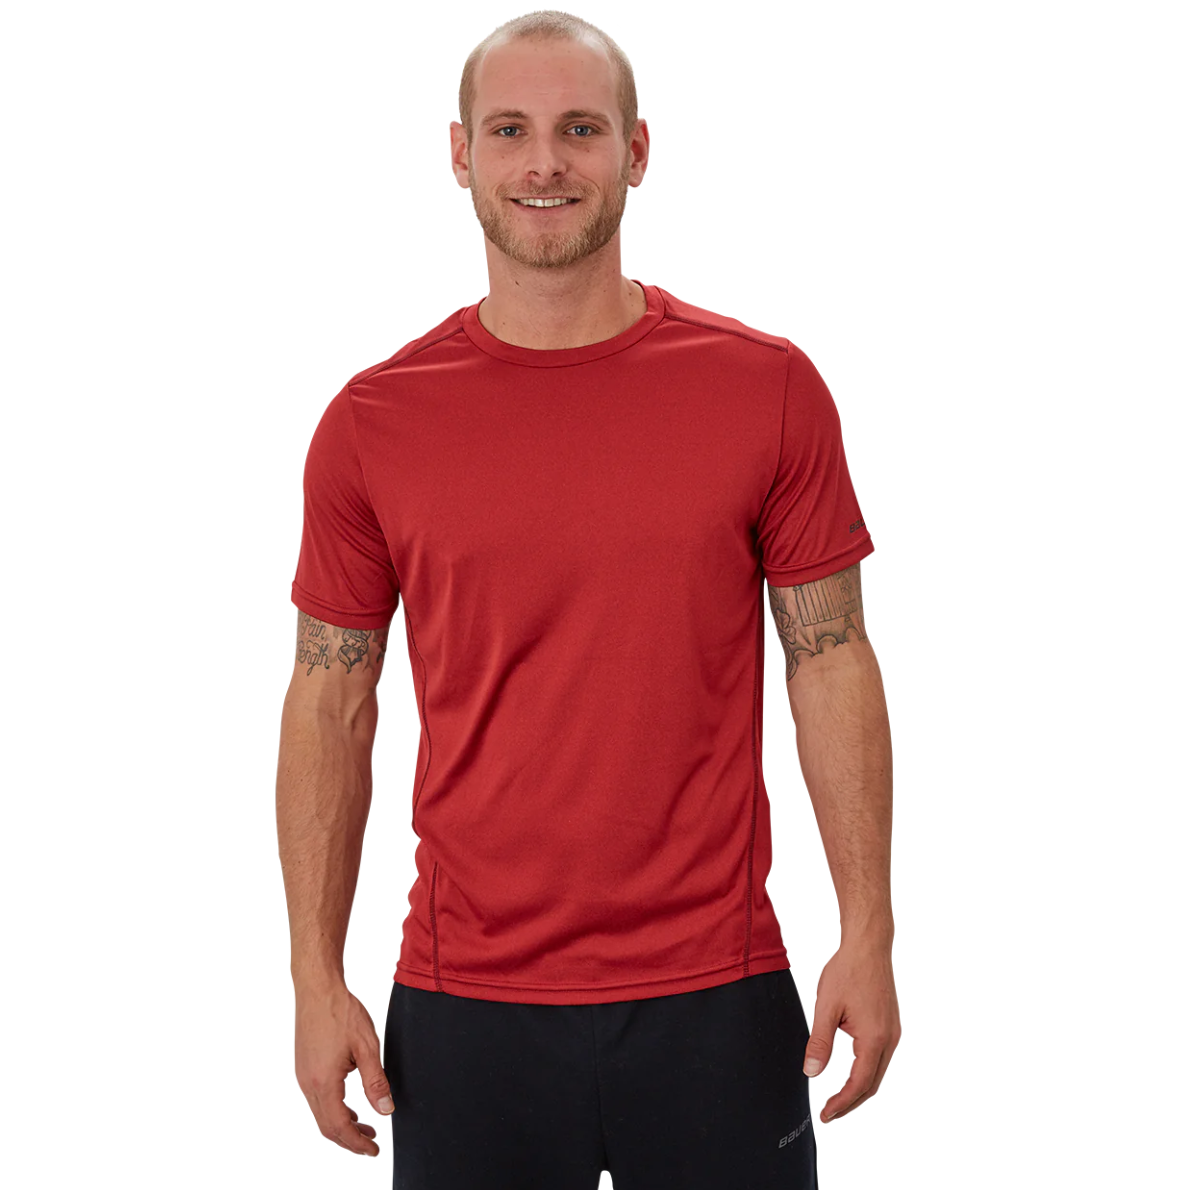 Bauer Team Tech T-Shirt in Red - Senior